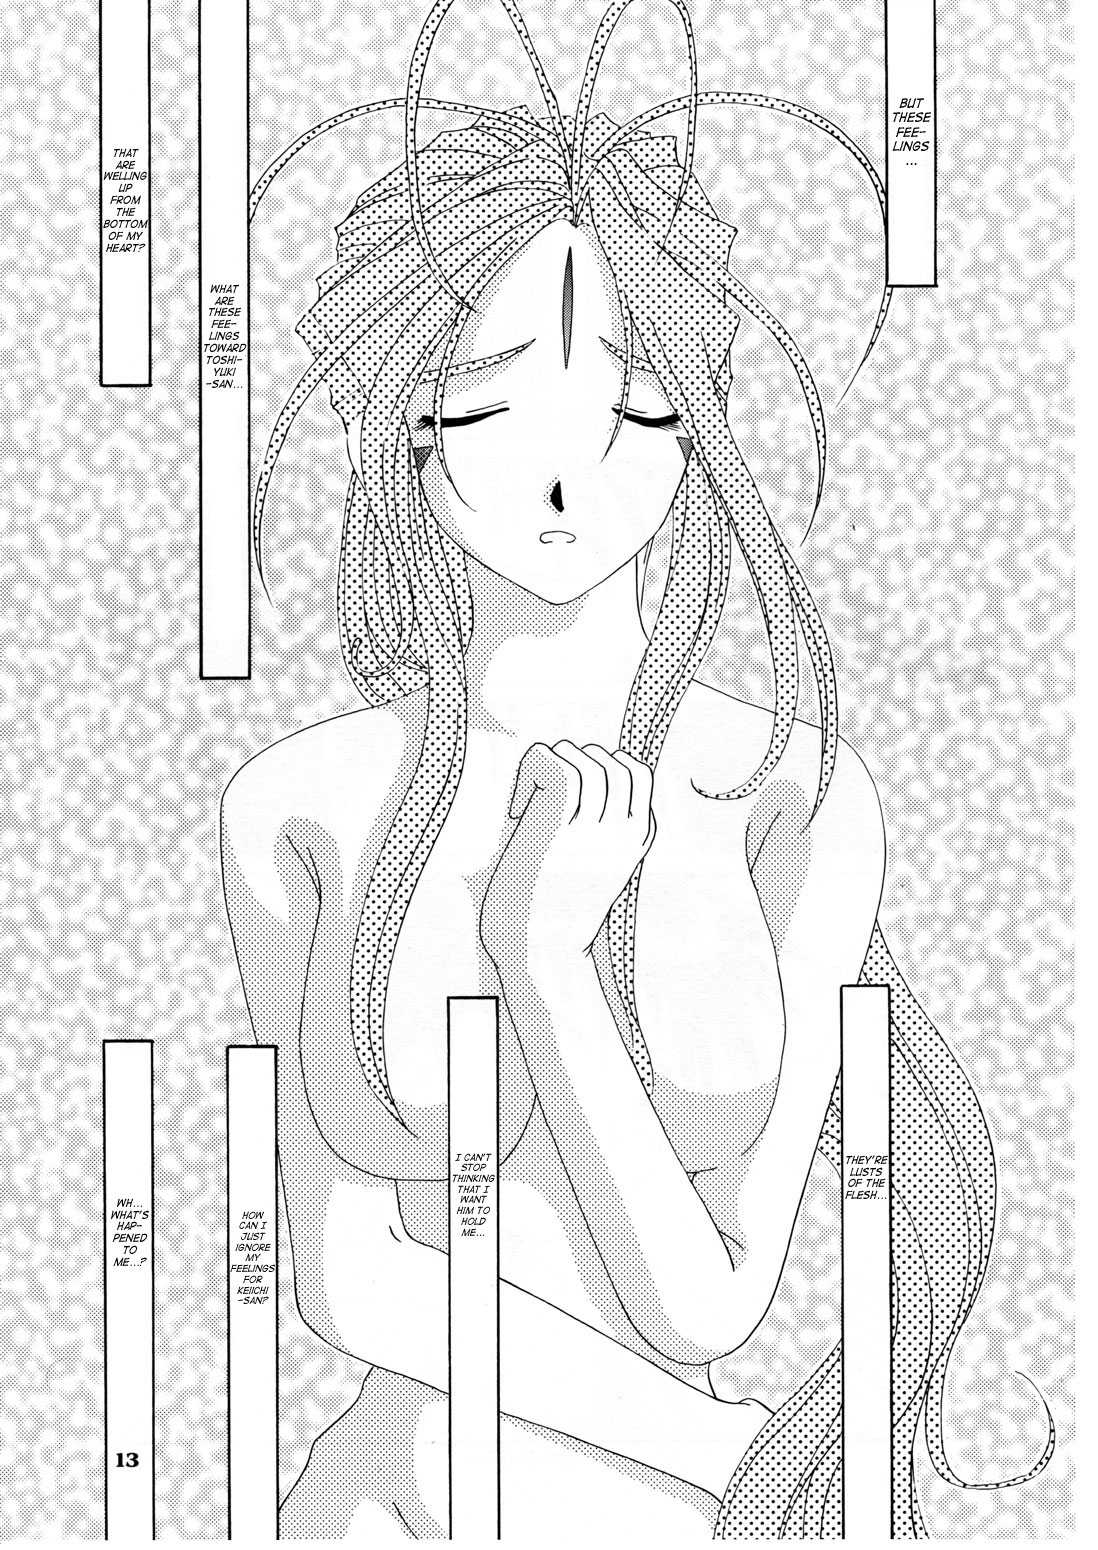 [Tenzan Factory] Nightmare of My Goddess Vol.3 (Ah! My Goddess) [ENG] 